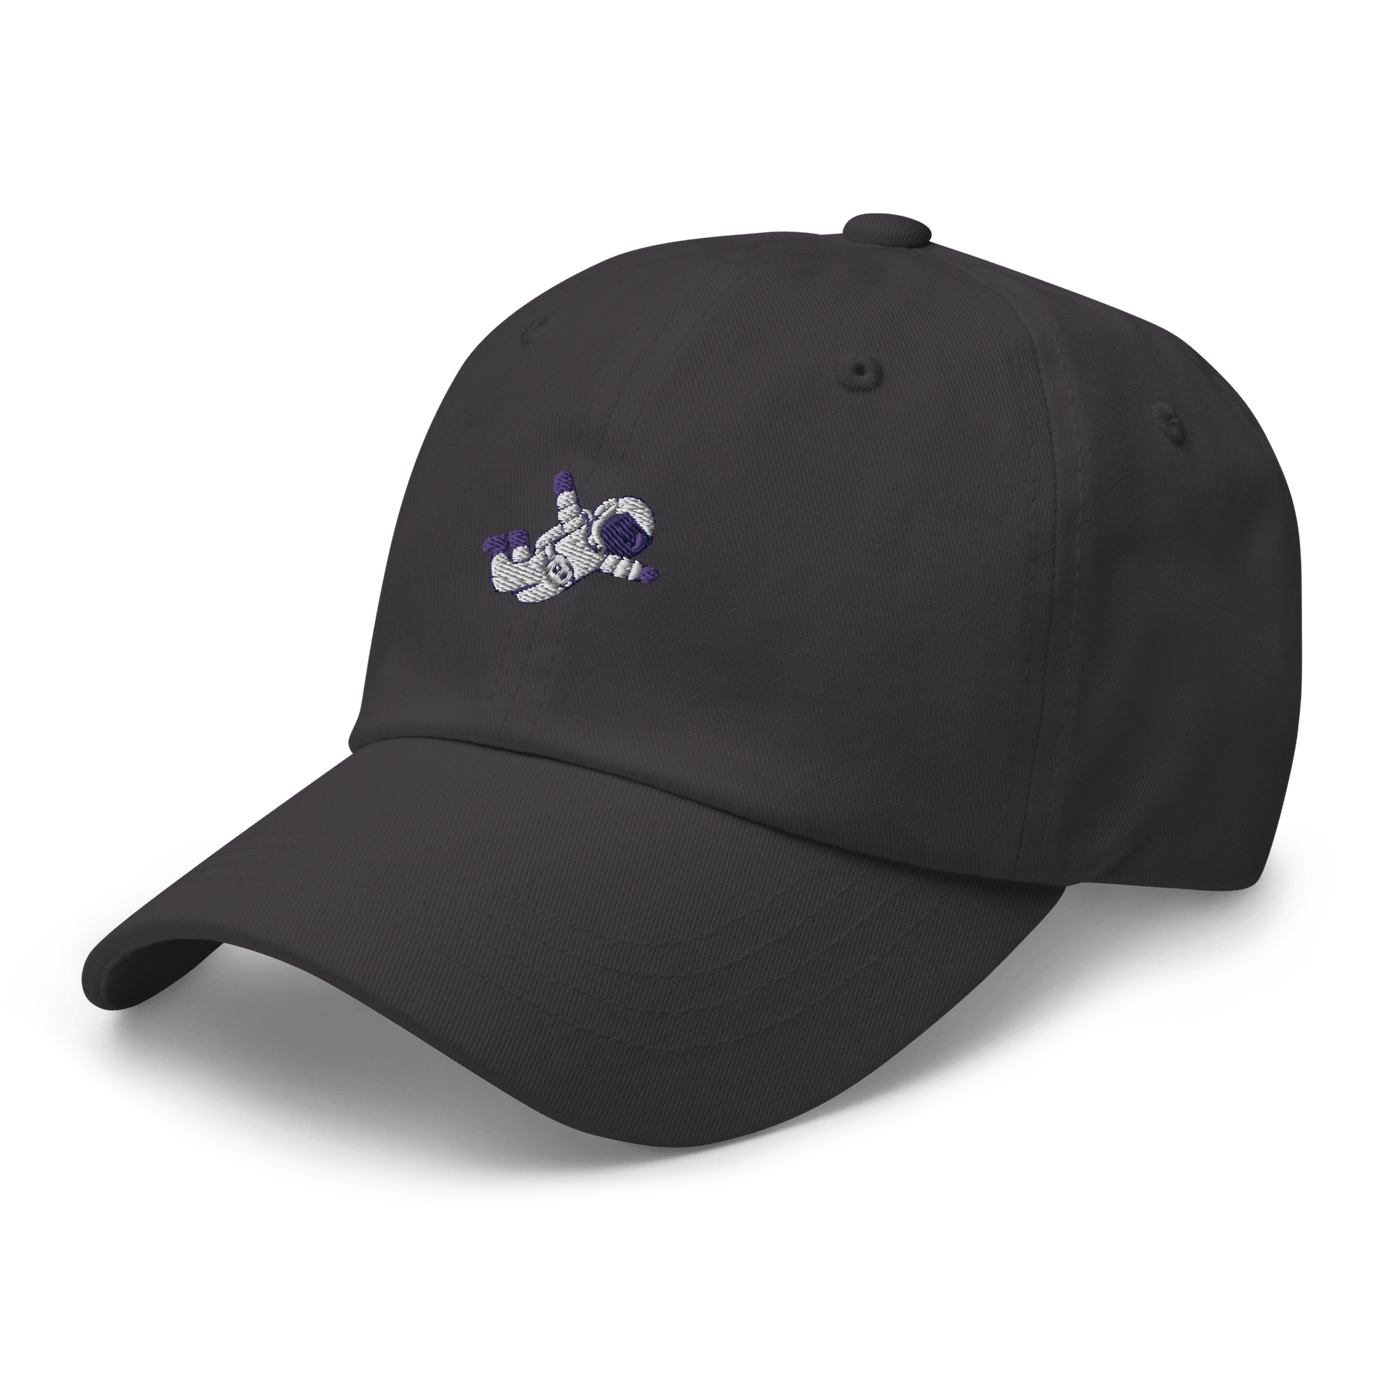 Astronaut Dad hat - Dark Grey - - Just Another Cap Store